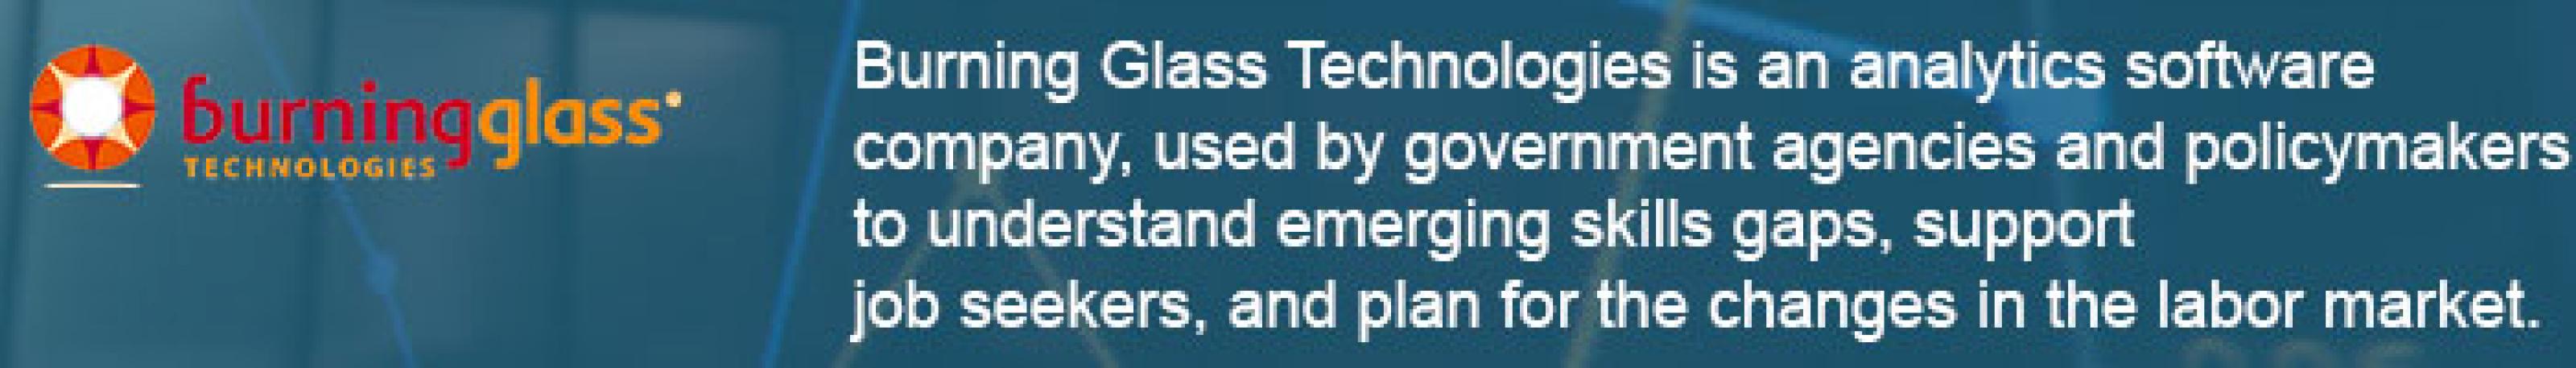 Burning Glass Technologies Sponsor Ad